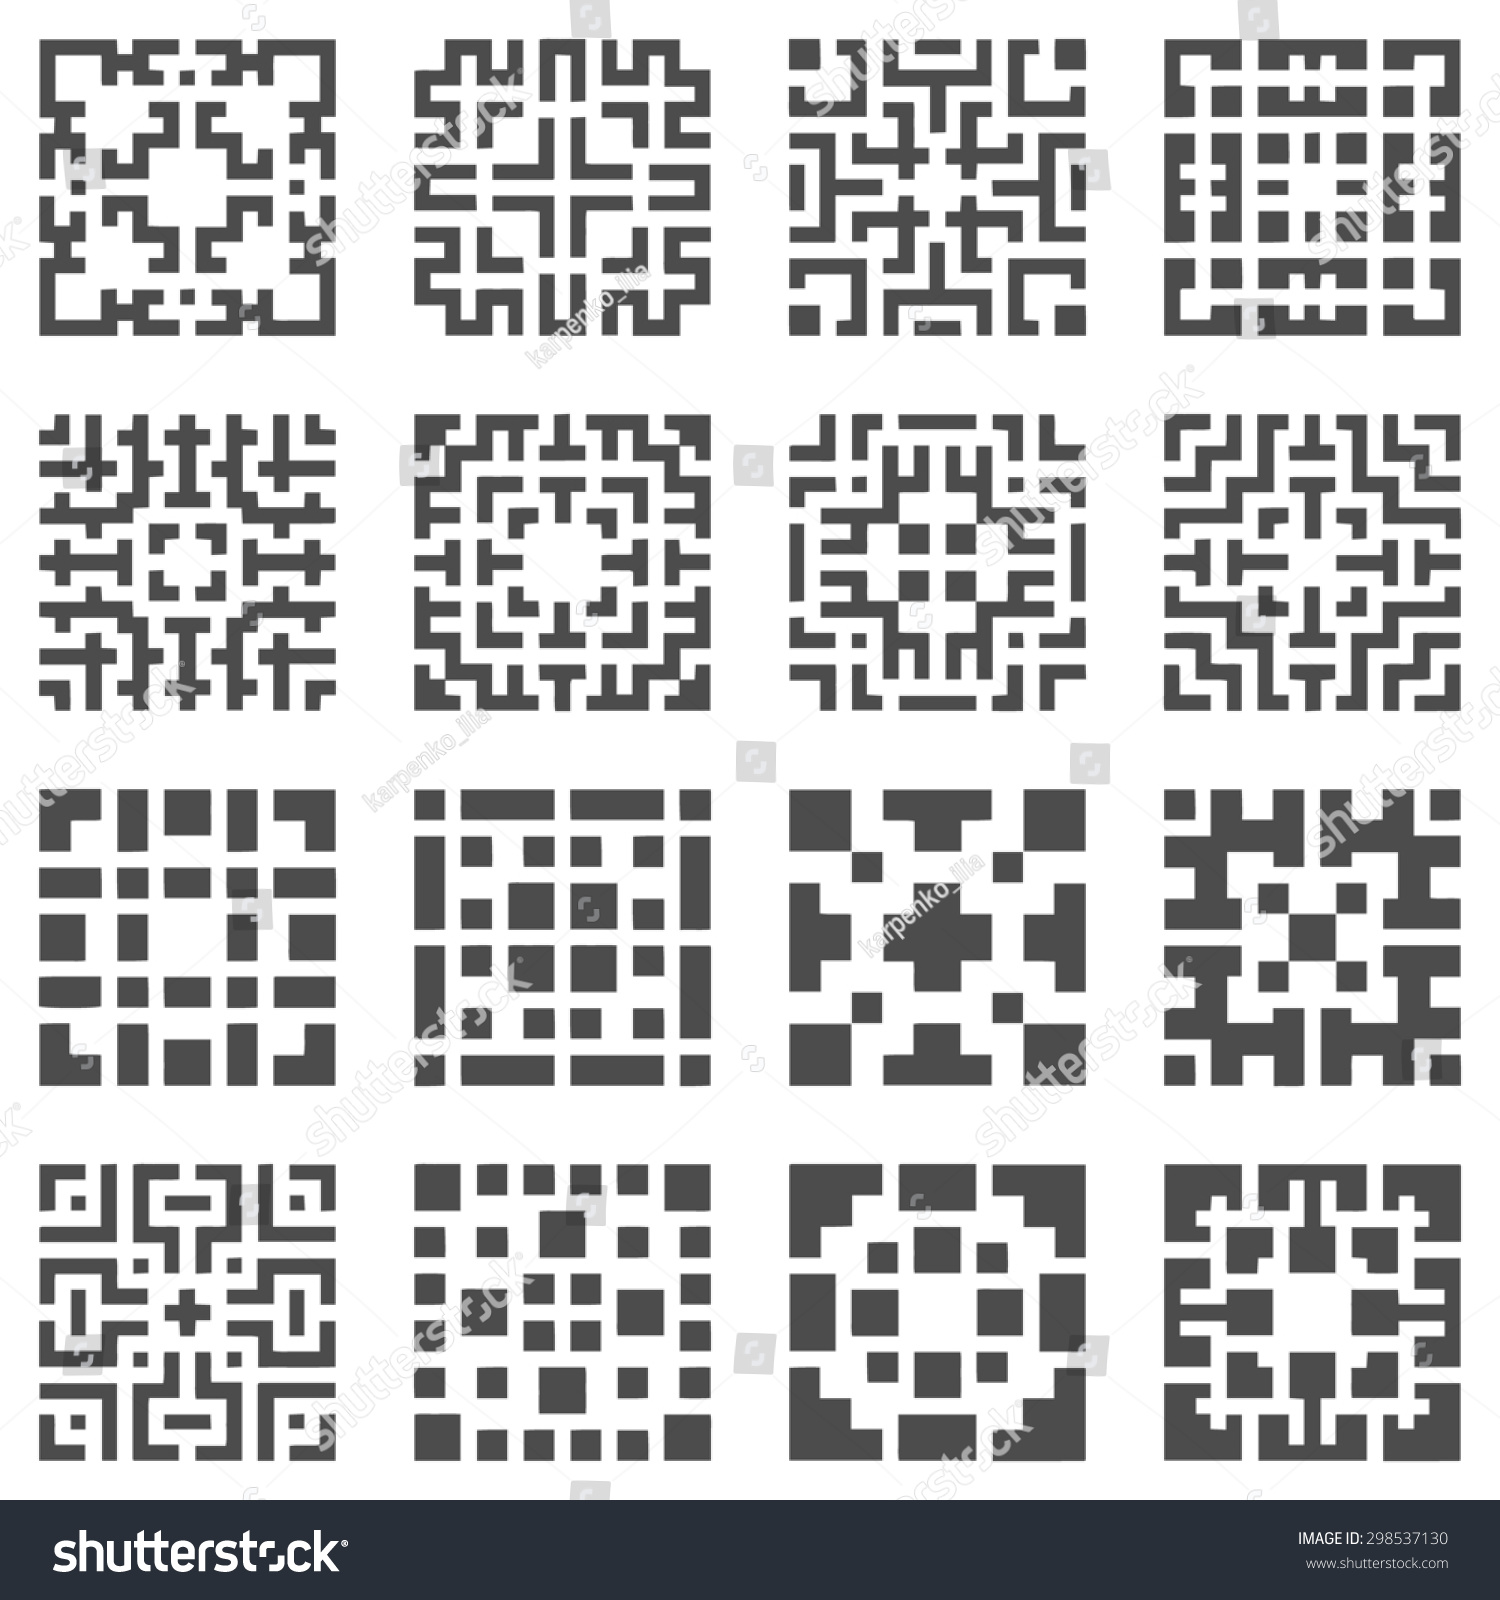 Geometric Elements Pixel Art Collection Minimalism Stock Illustration 298537130 Shutterstock 8683